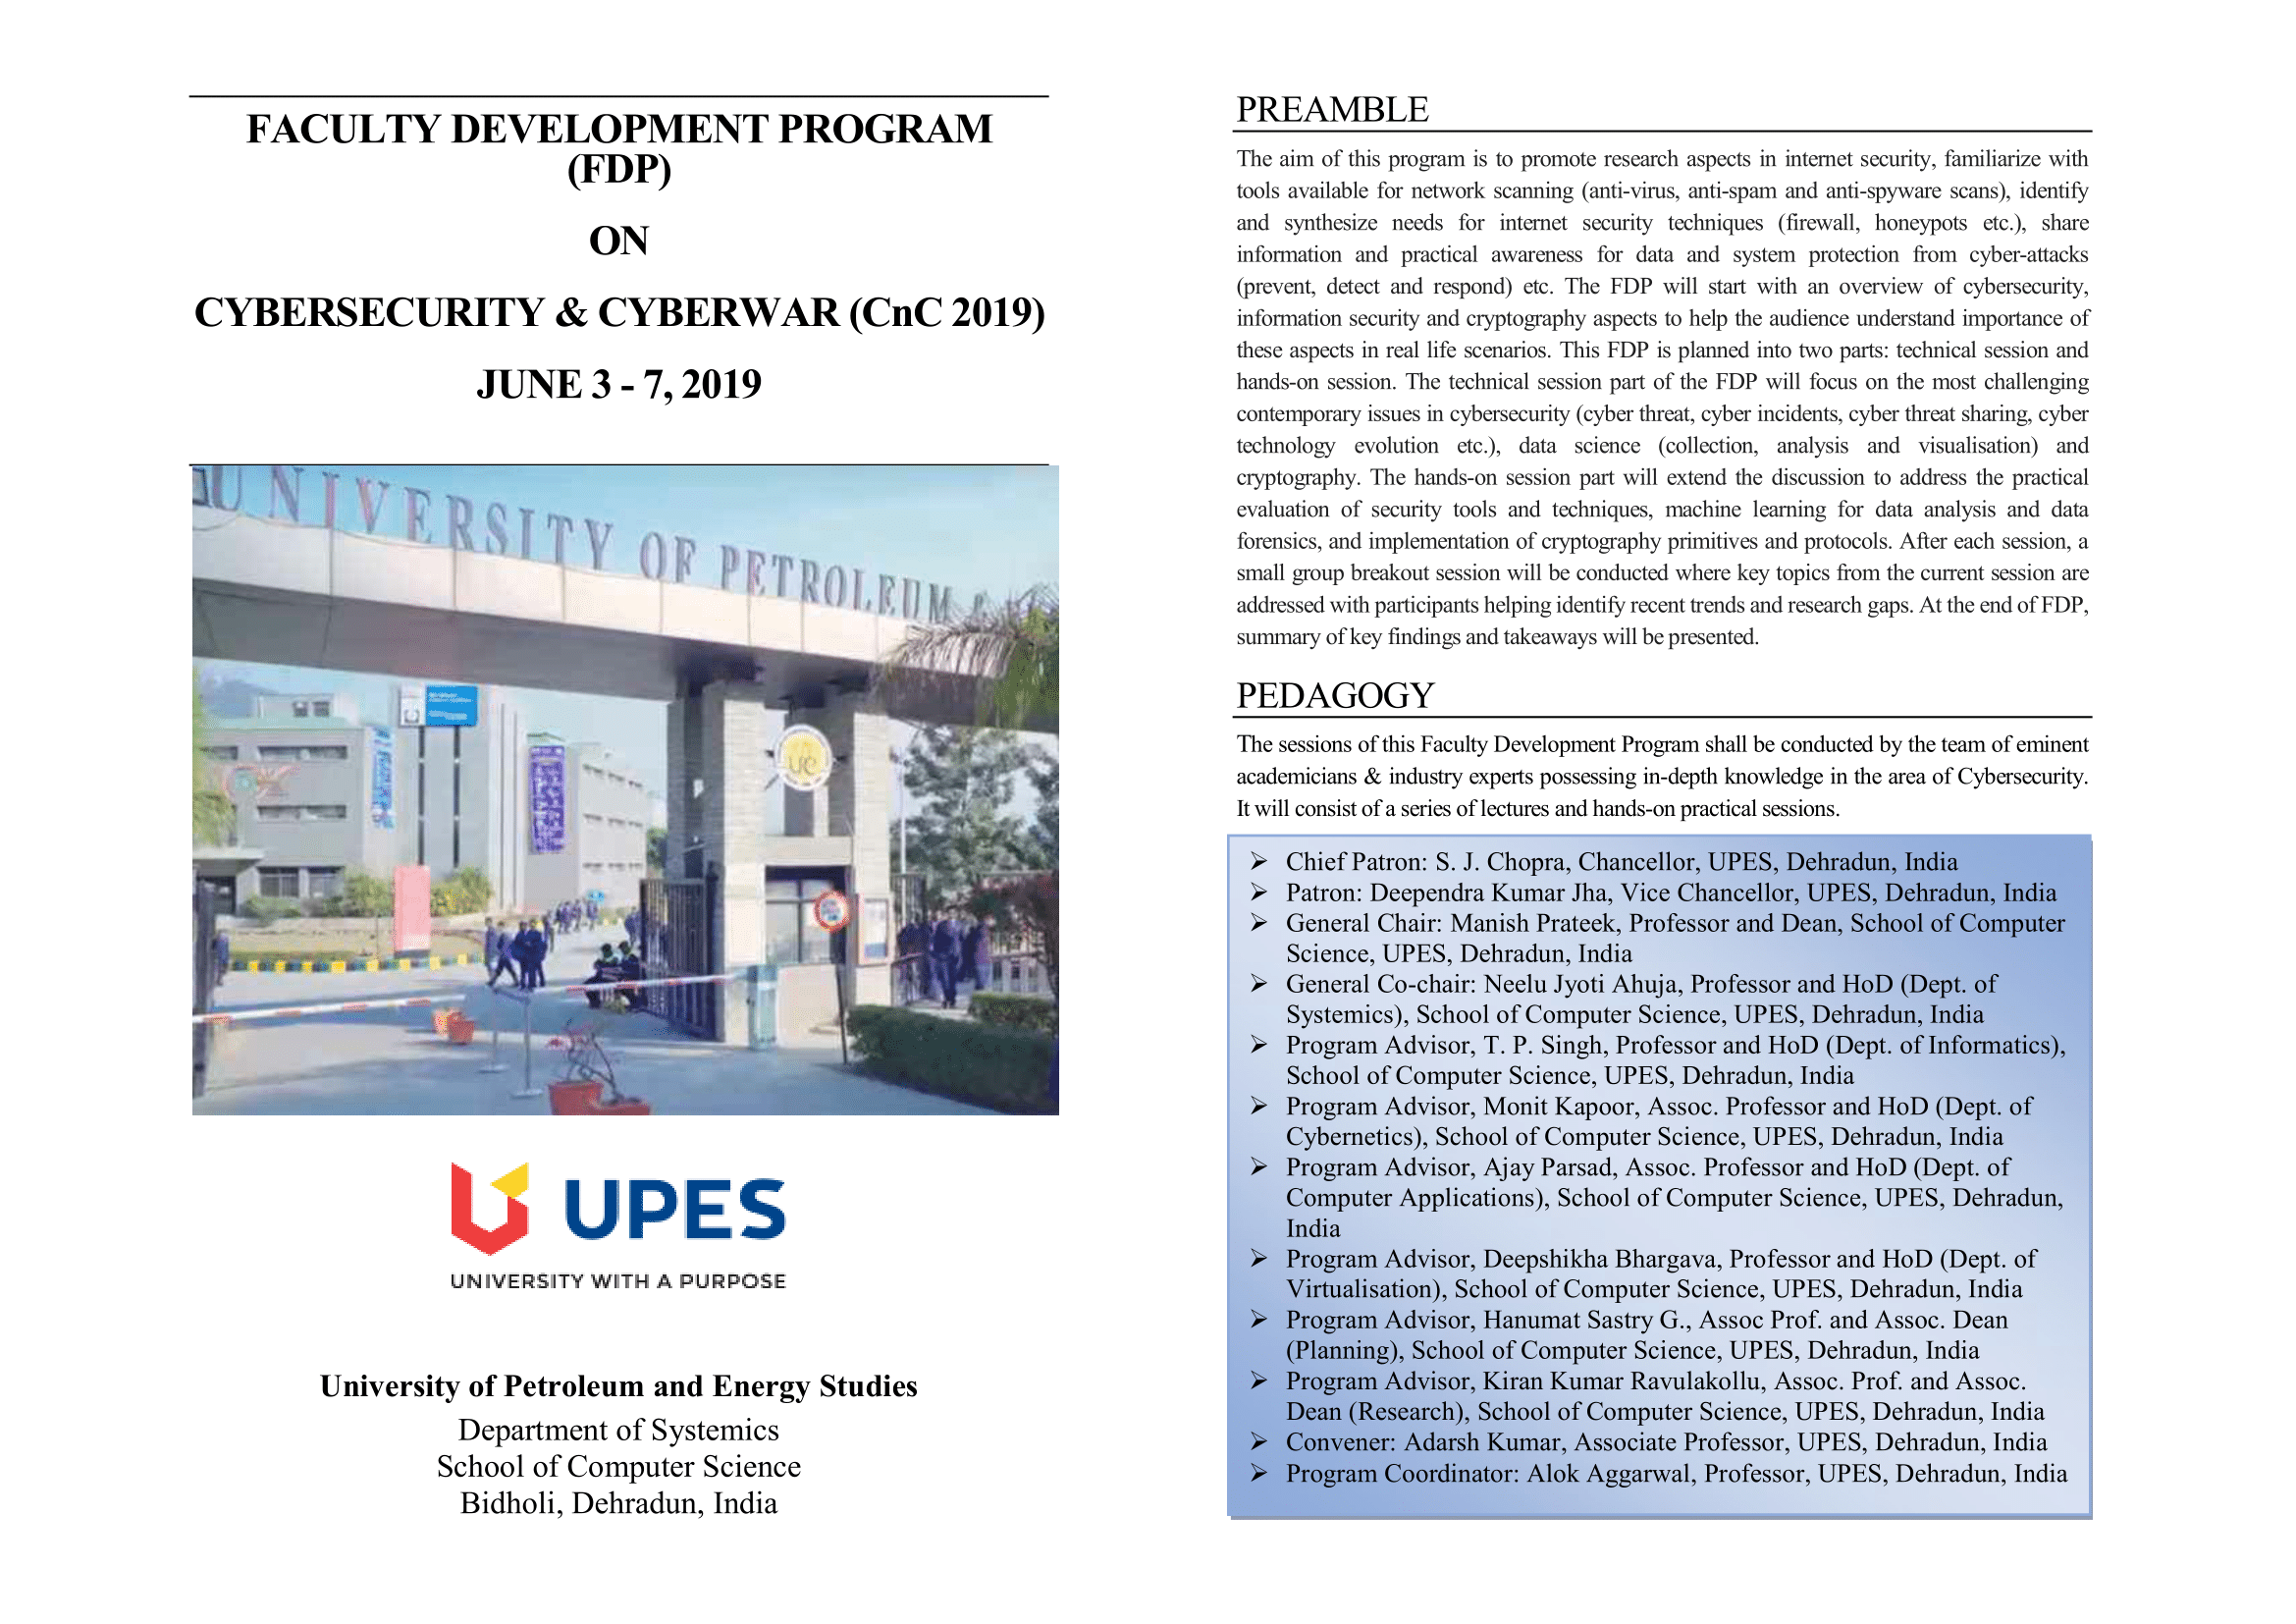 Faculty Development Program on Cybersecurity and Cyberwar, Dehradun, Uttarakhand, India